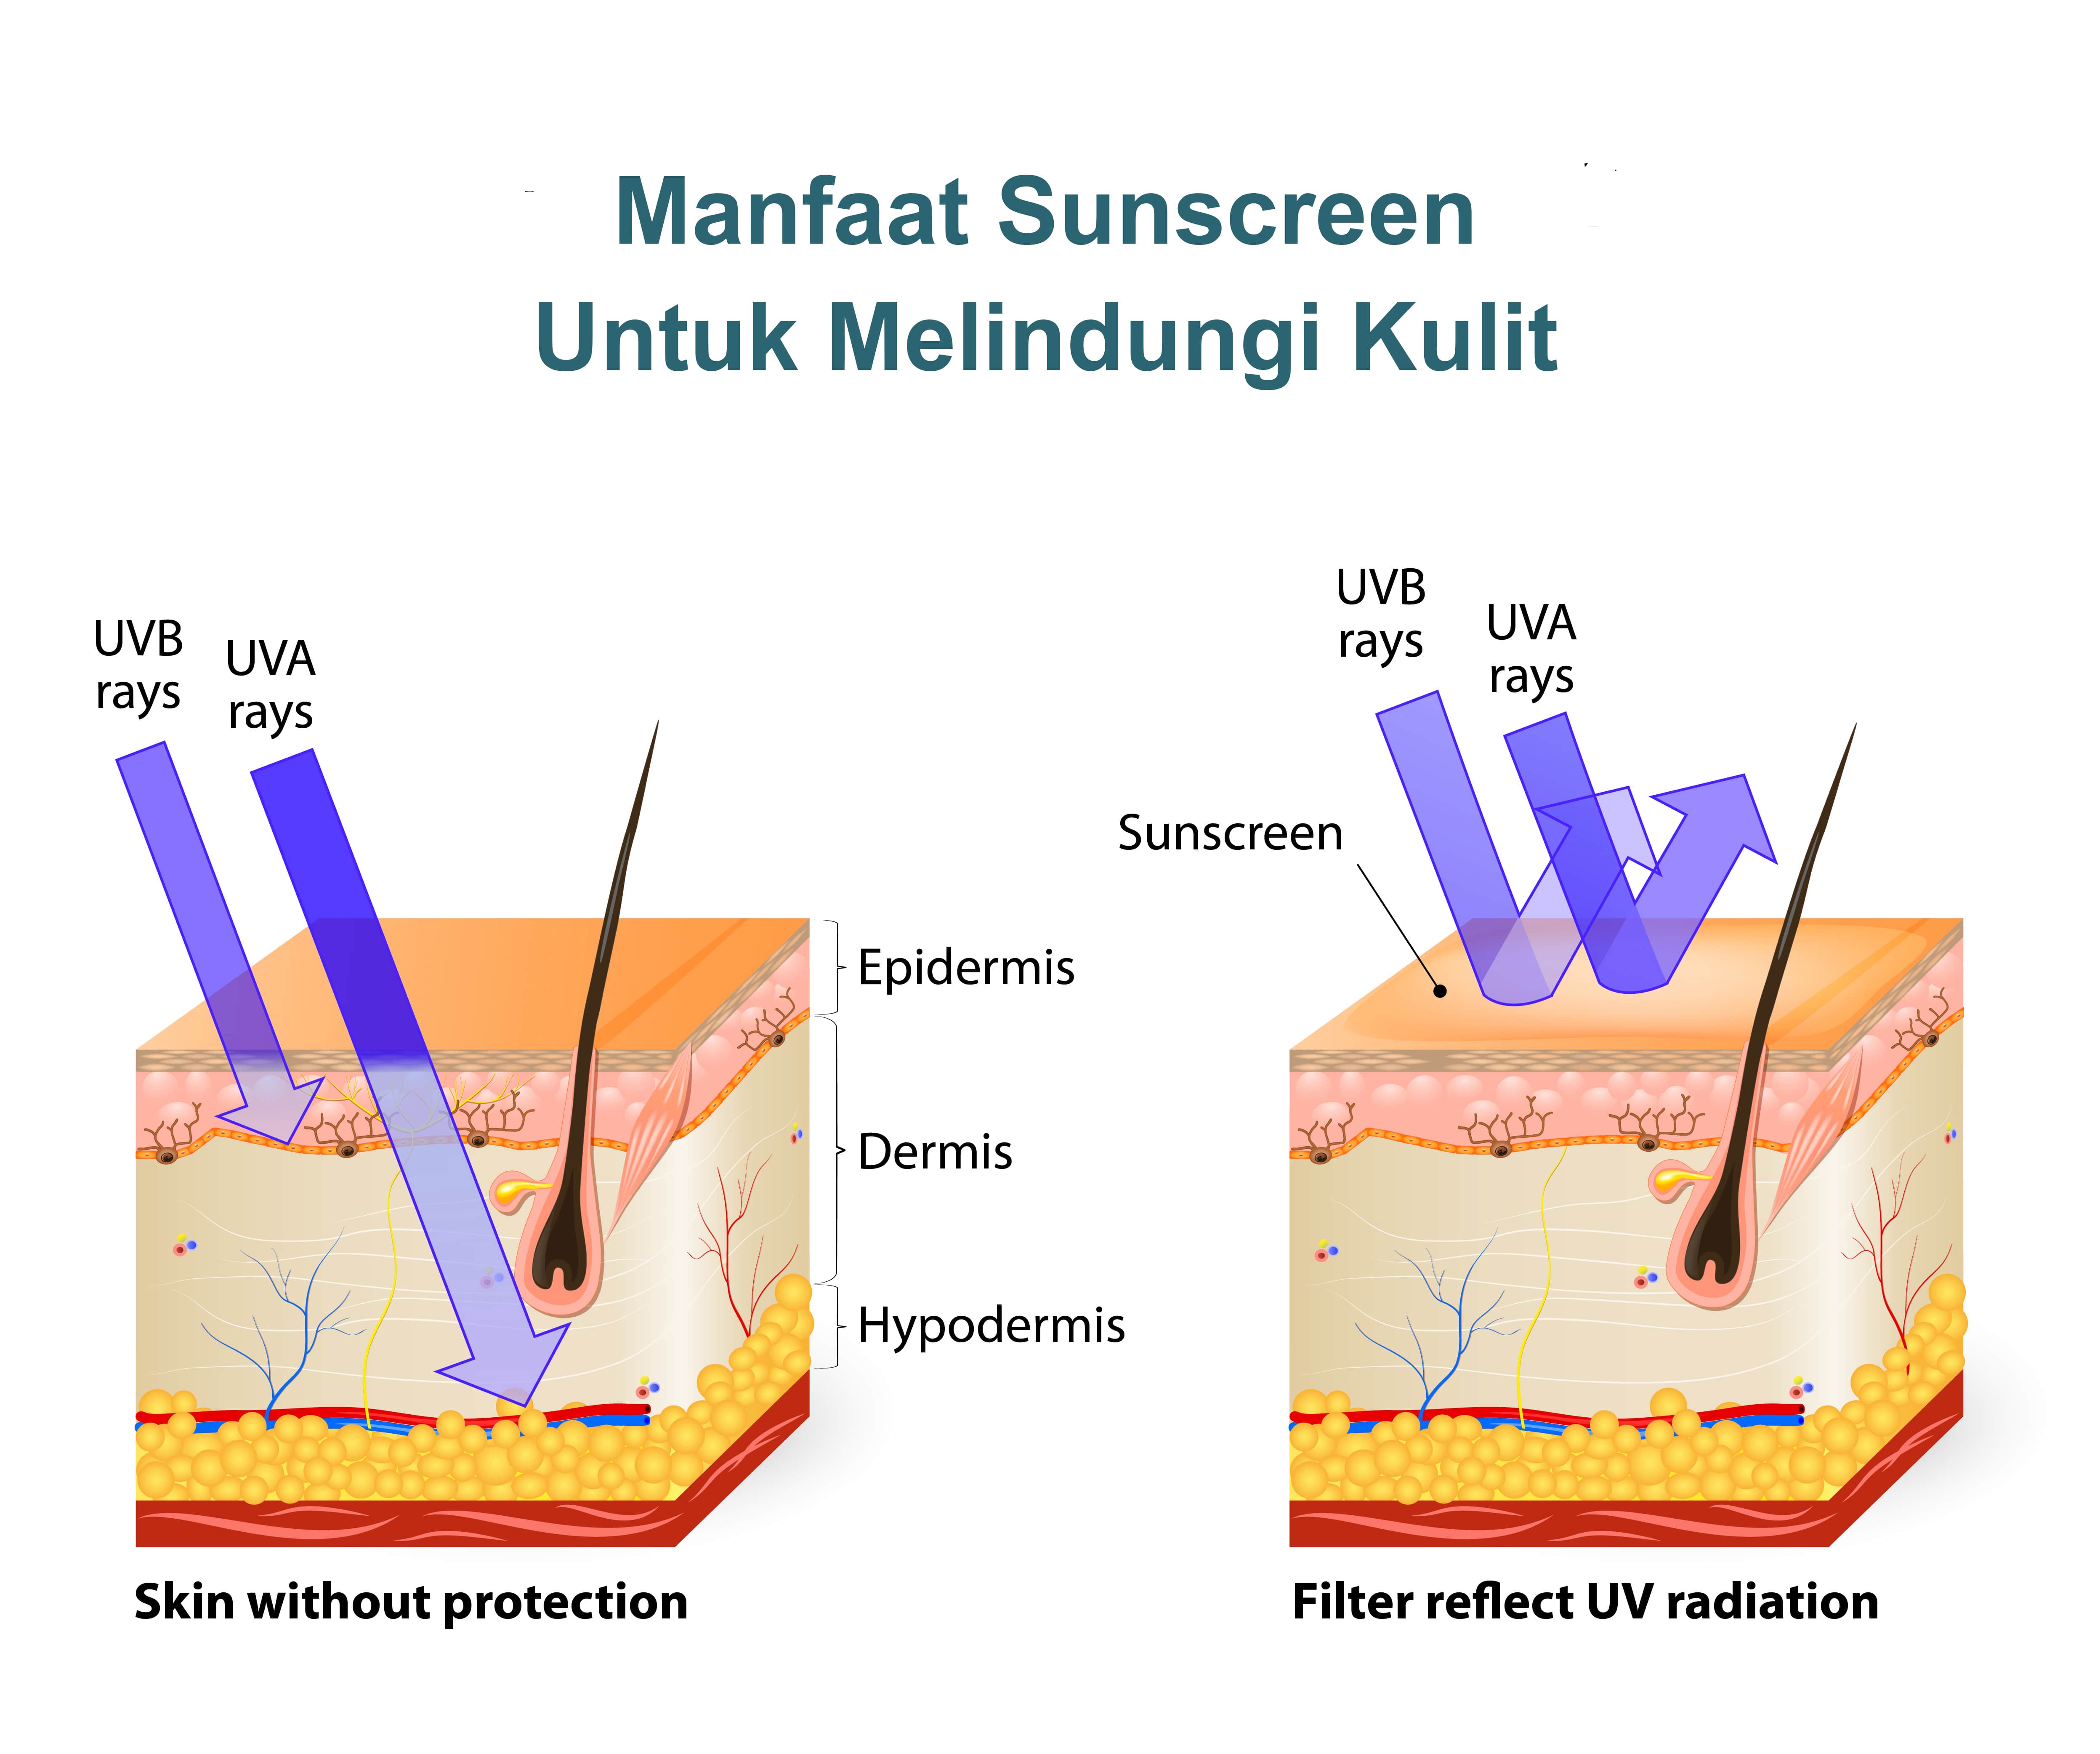 manfaat sunscreen untuk melindungi kulit